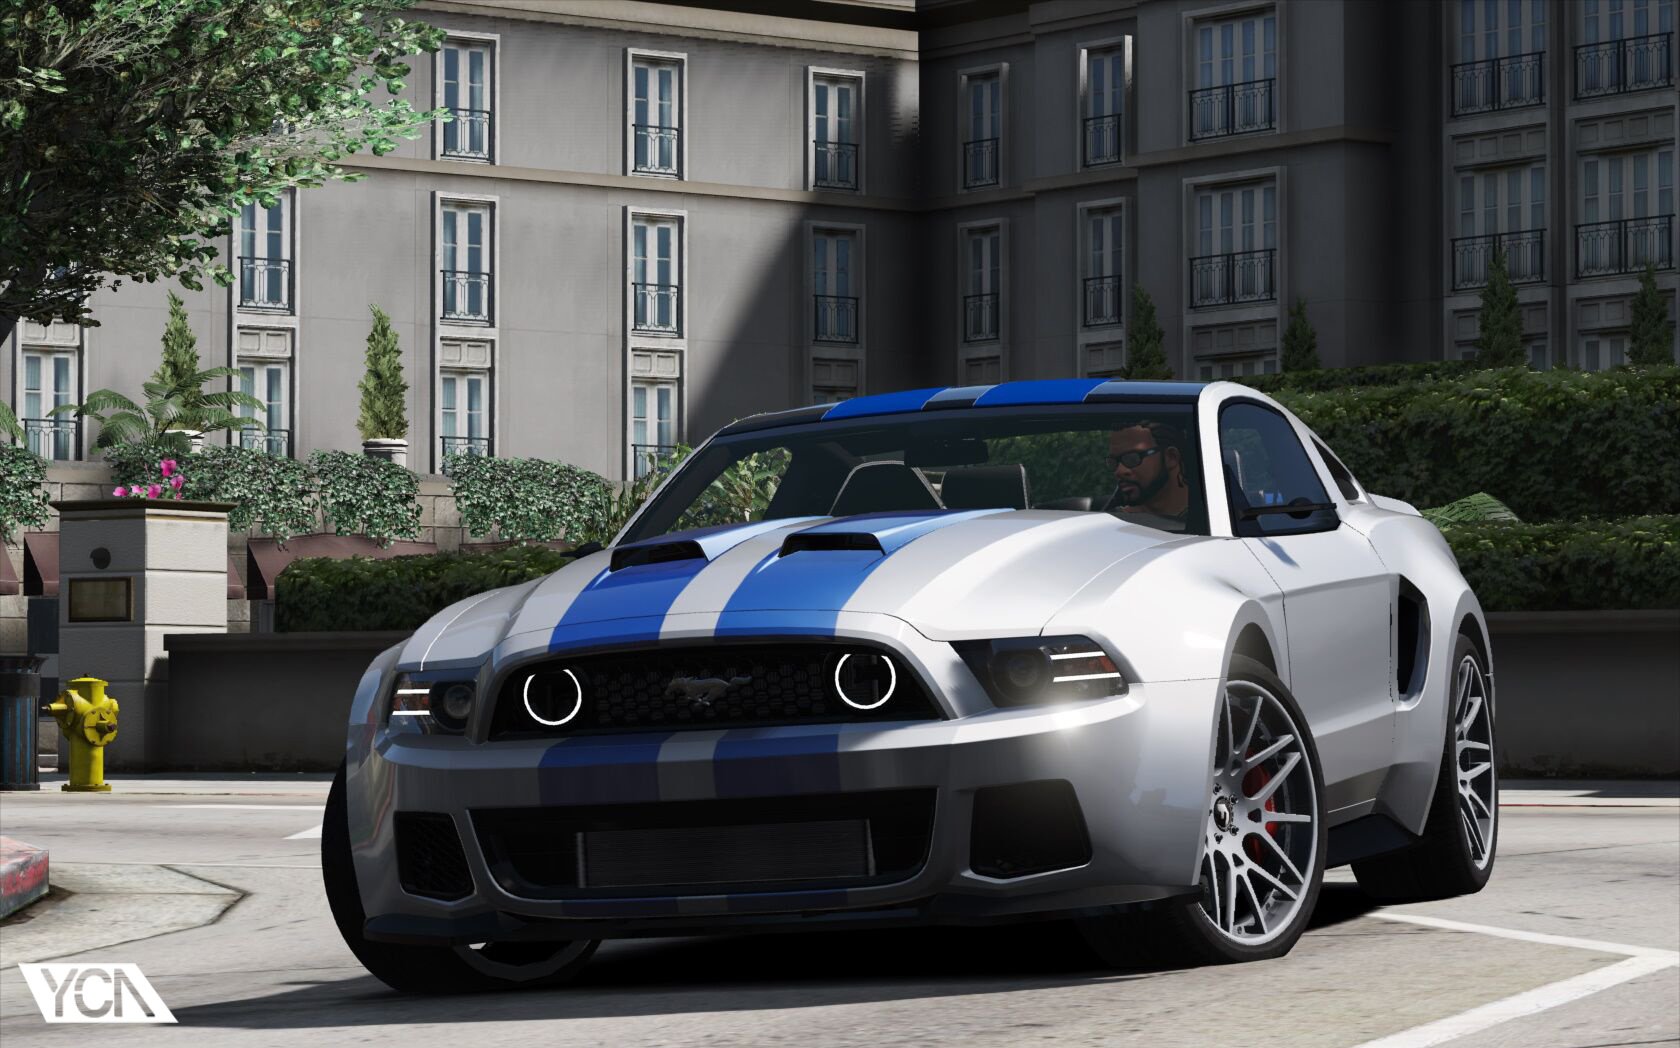 Ford Mustang GT NFS + GT500 2013 [Add-On] - GTA5-Mods.com